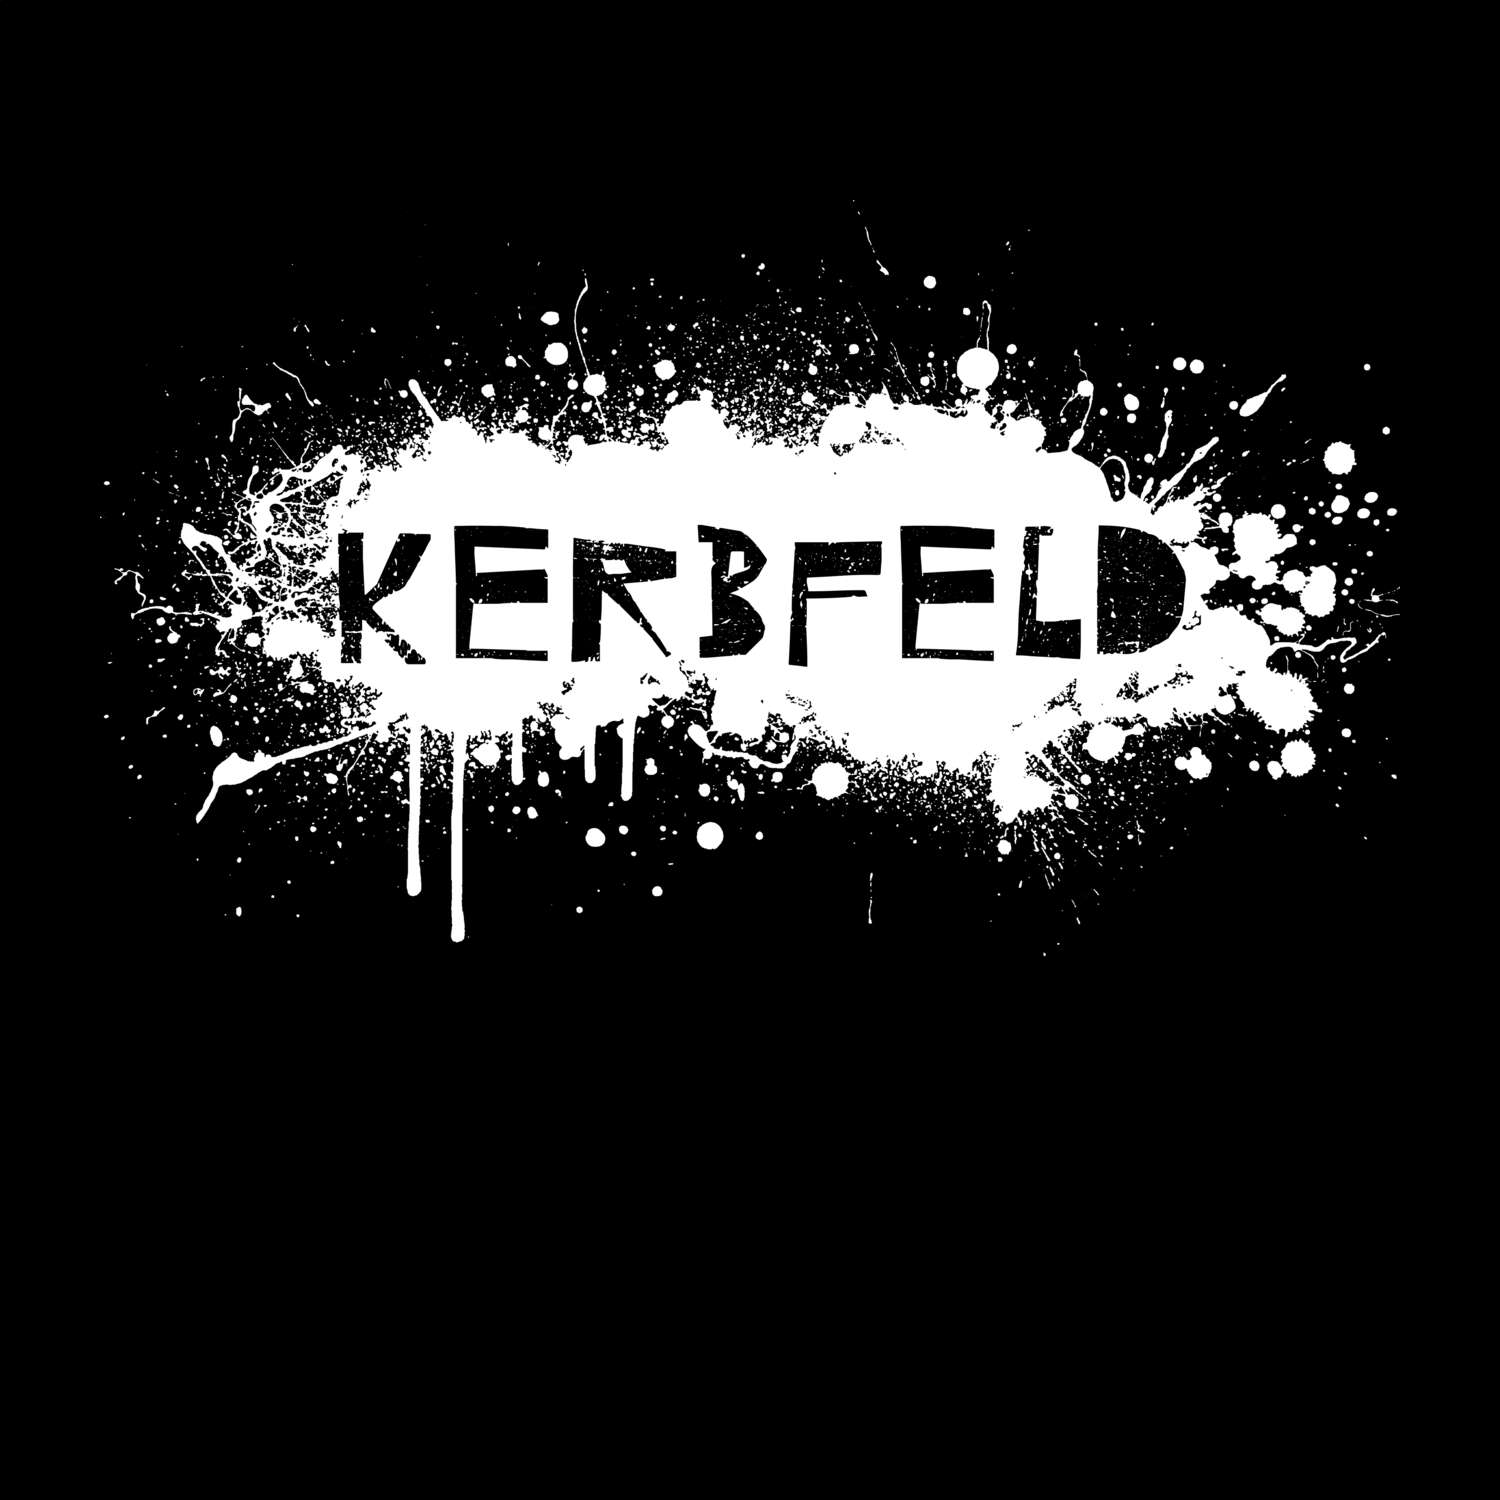 Kerbfeld T-Shirt »Paint Splash Punk«